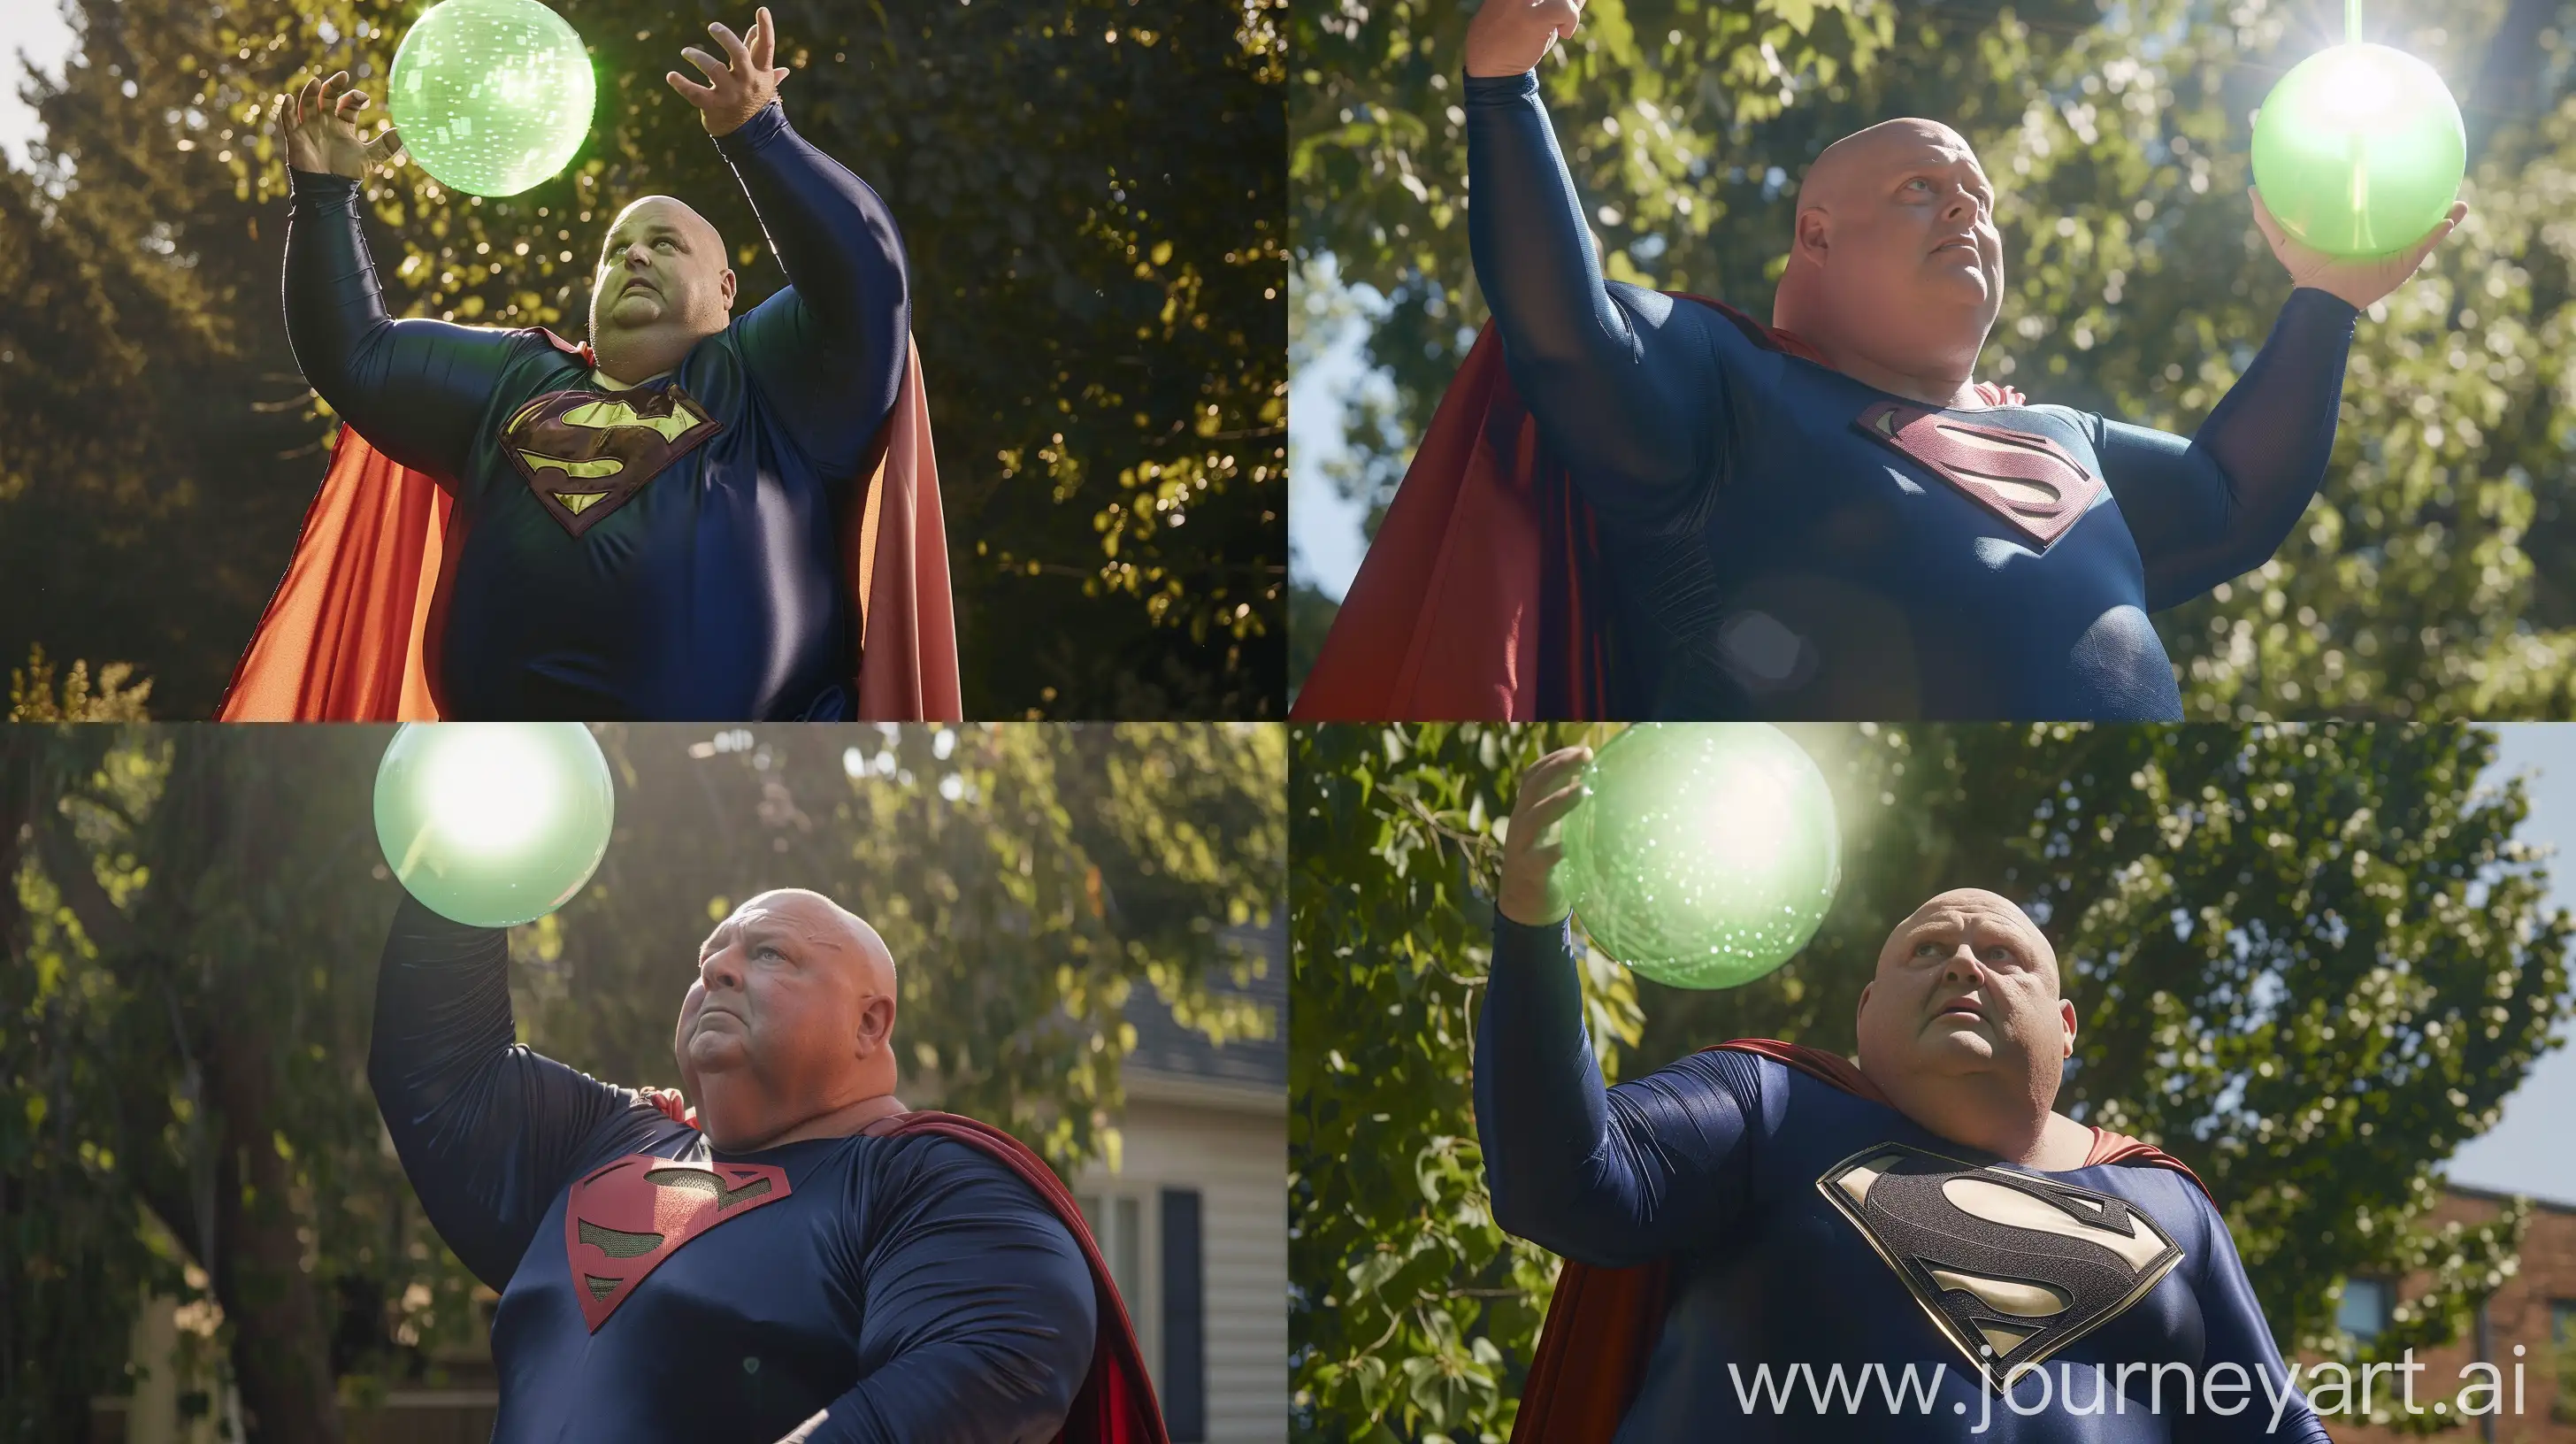 Senior-Gentleman-as-Superhero-in-Silky-Costume-Levitating-Orb-in-Natural-Light